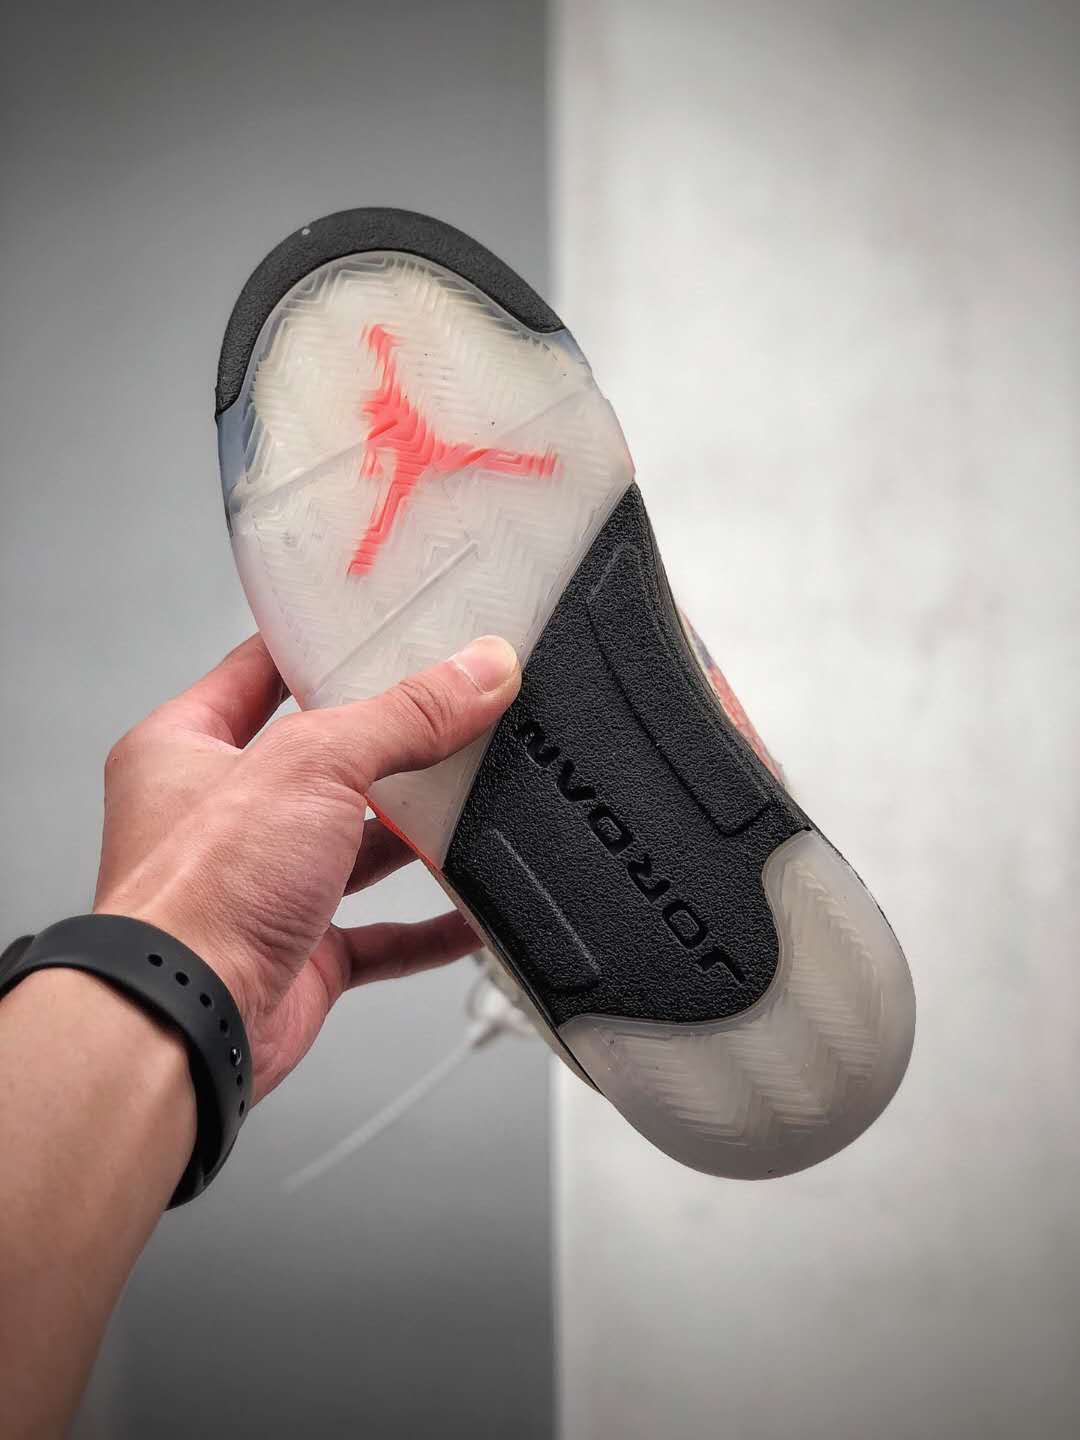 Air Jordan 5 Retro 'International Flight' 136027-148 - Stylish and Versatile Sneakers for Global Style